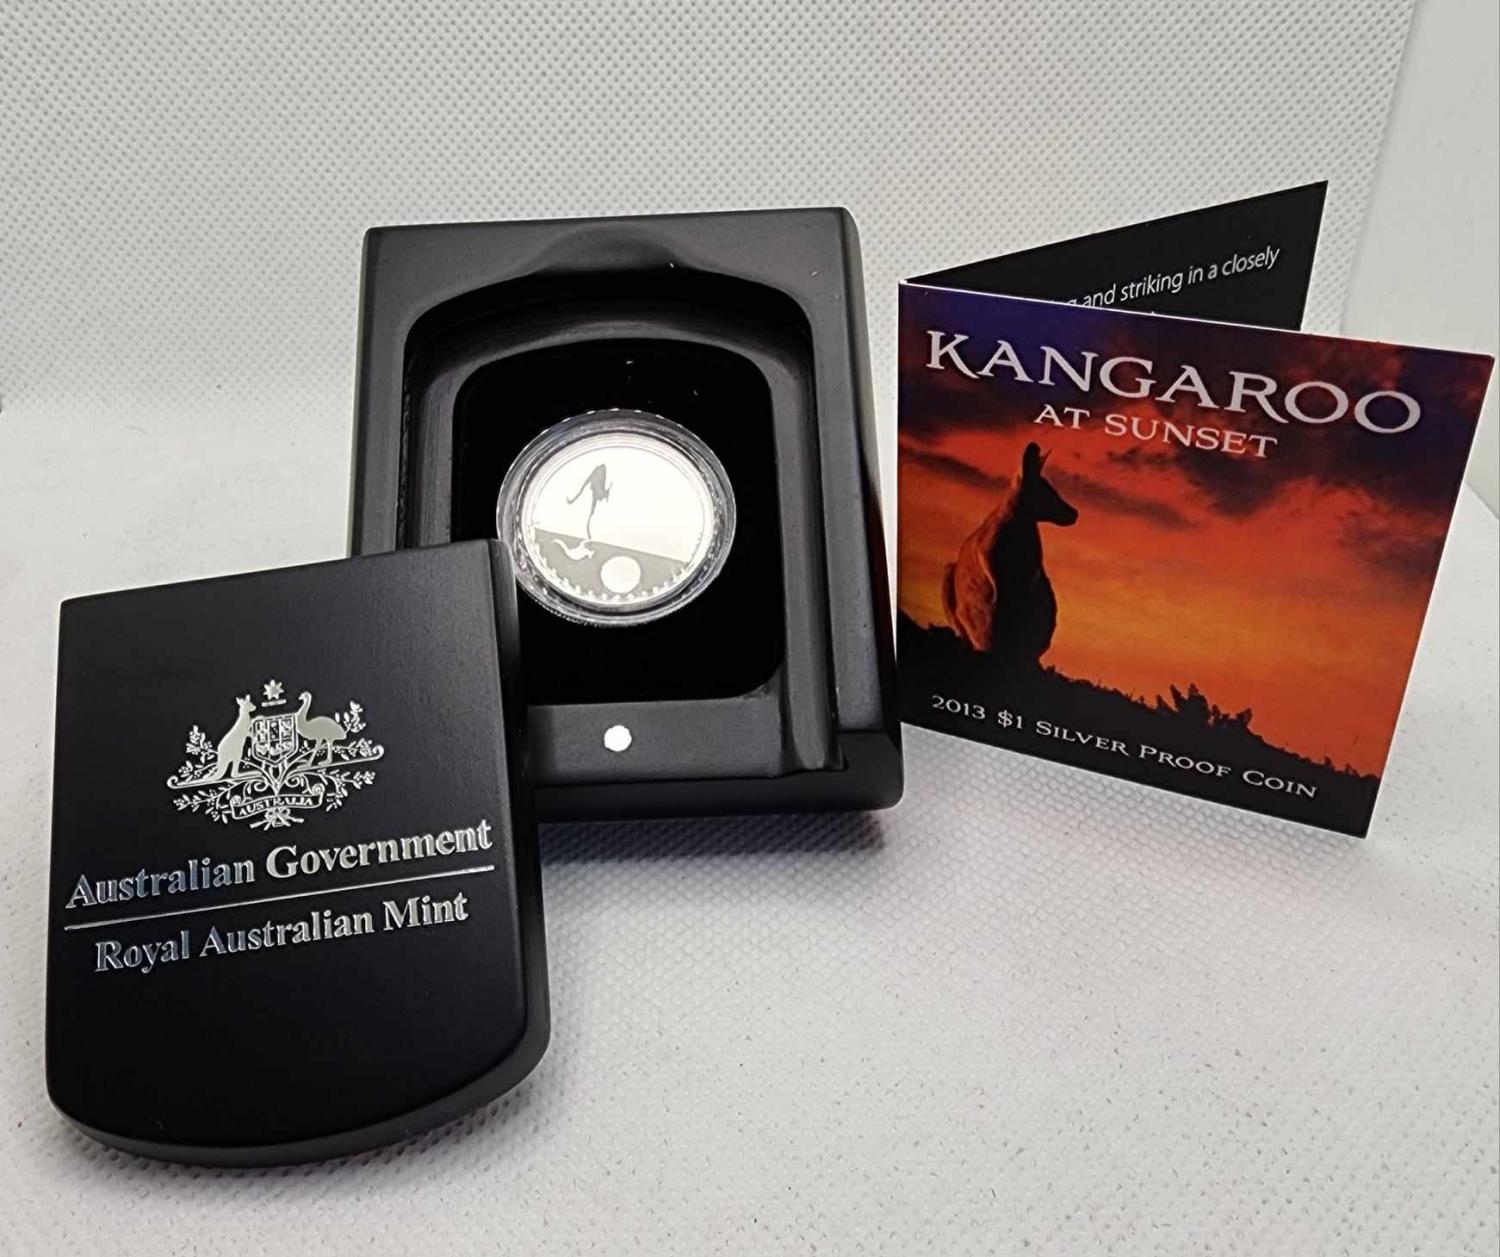 Thumbnail for 2013 $1 Silver Proof Coin - Kangaroo at Sunset